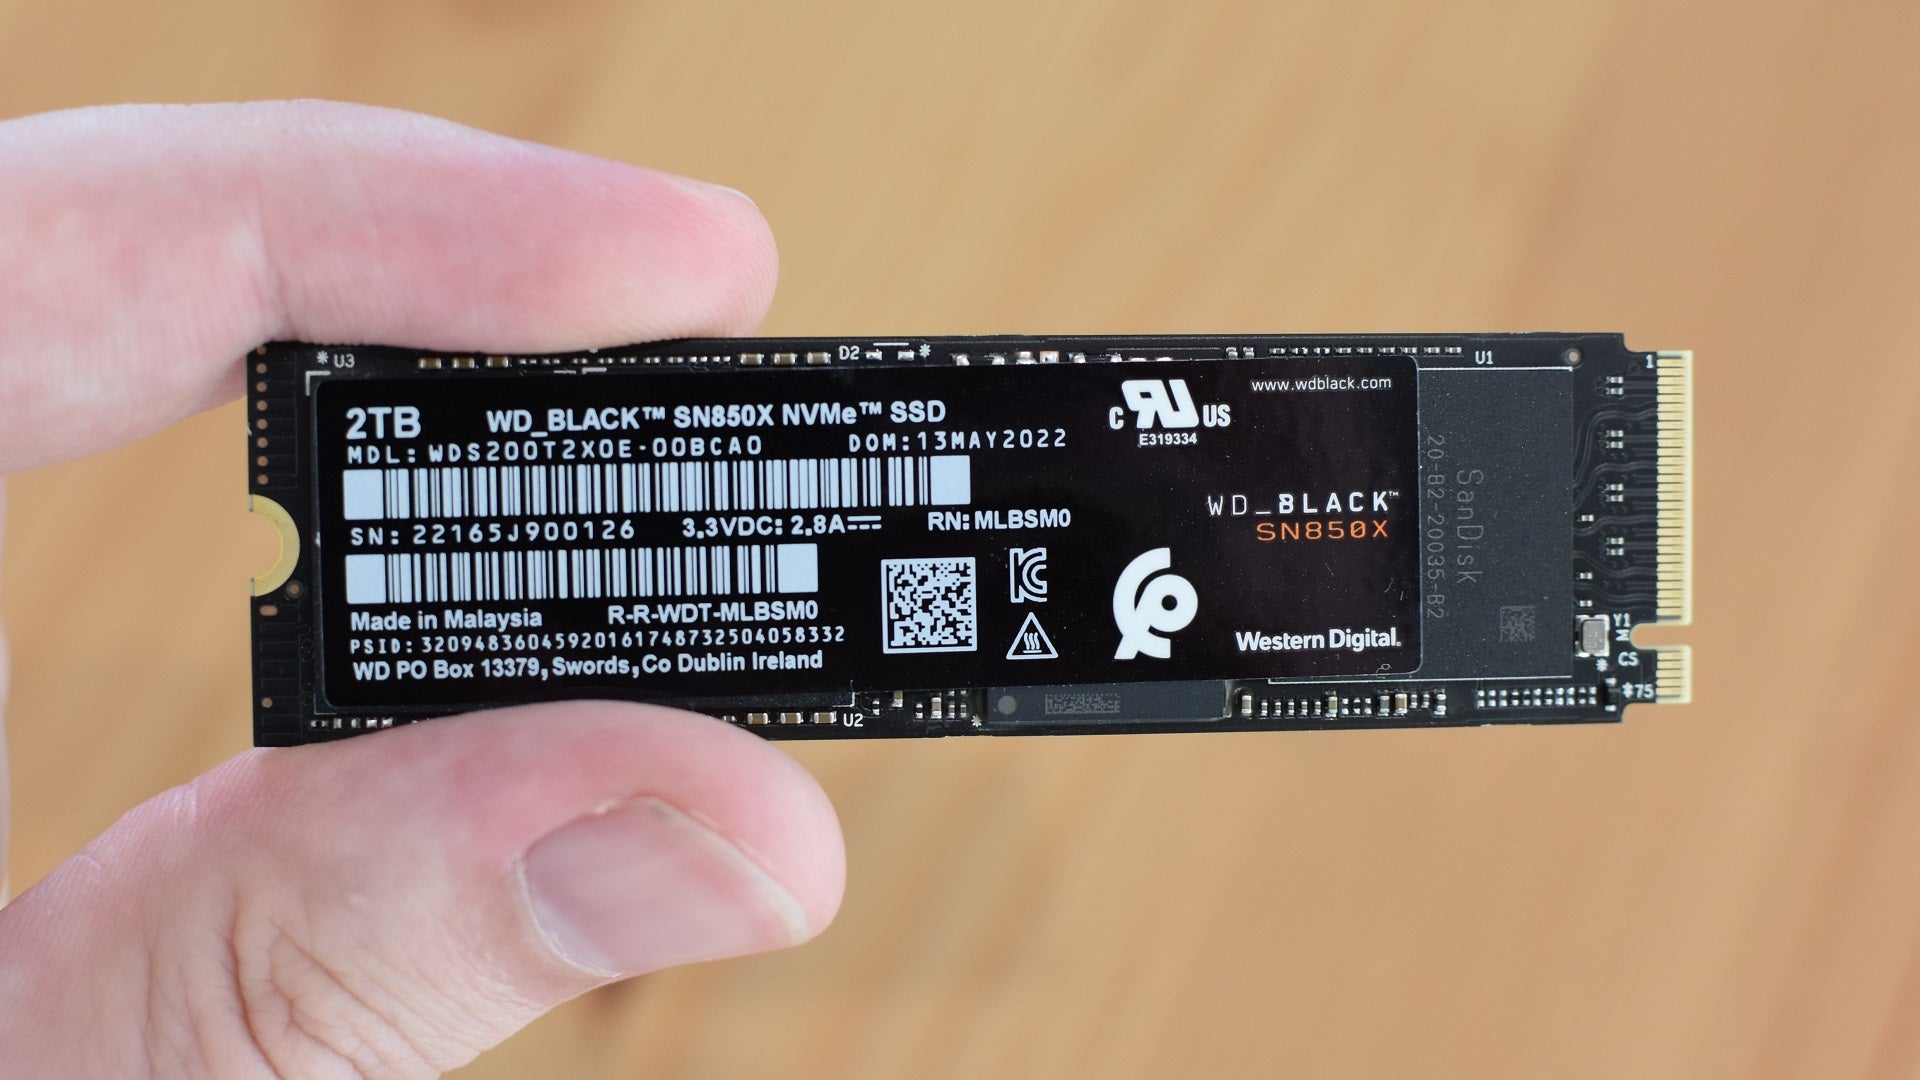 The WD Black SN850X SSD.